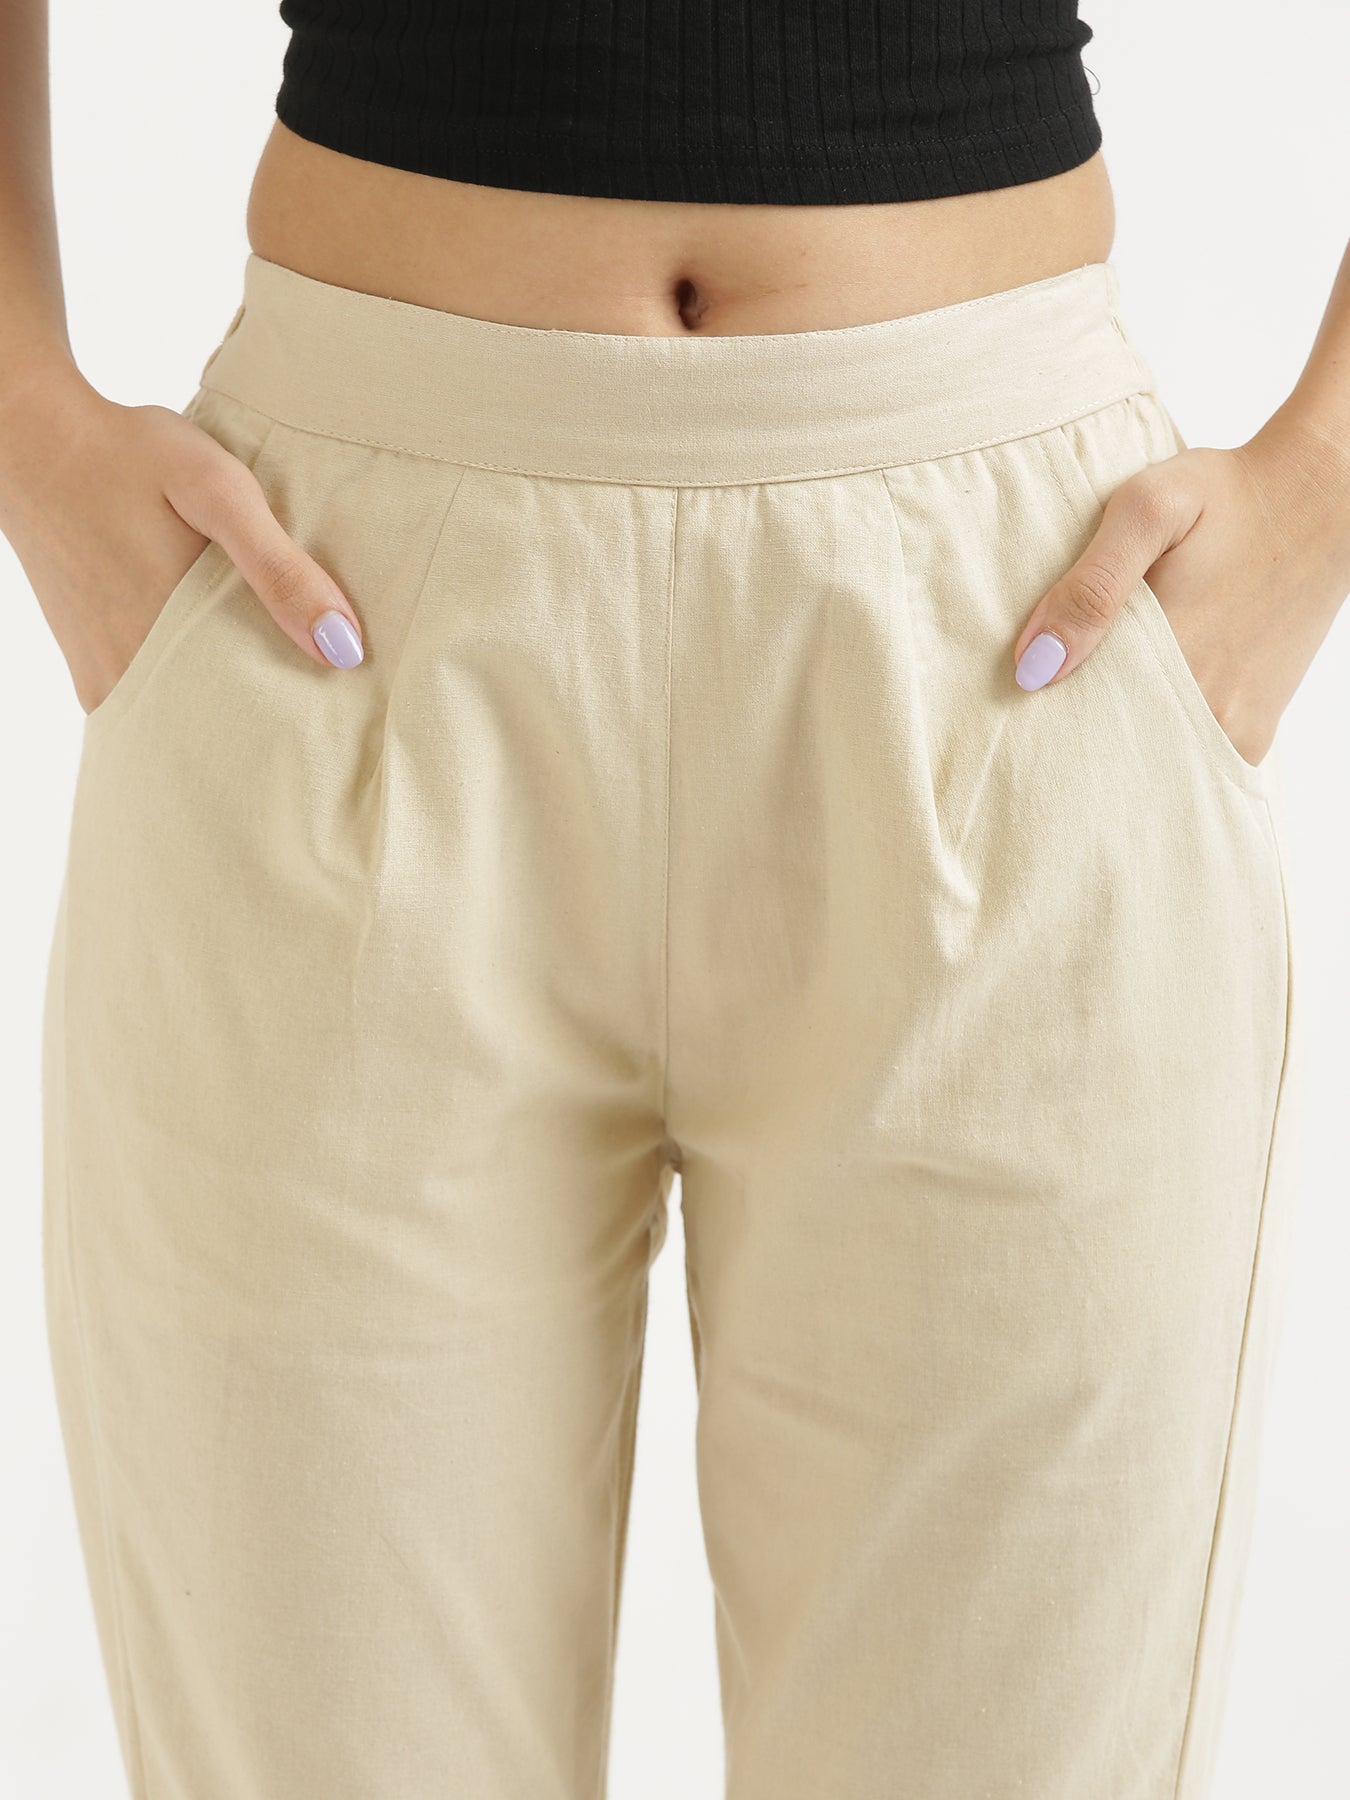 Amazon.com: Khaki Pants Women's